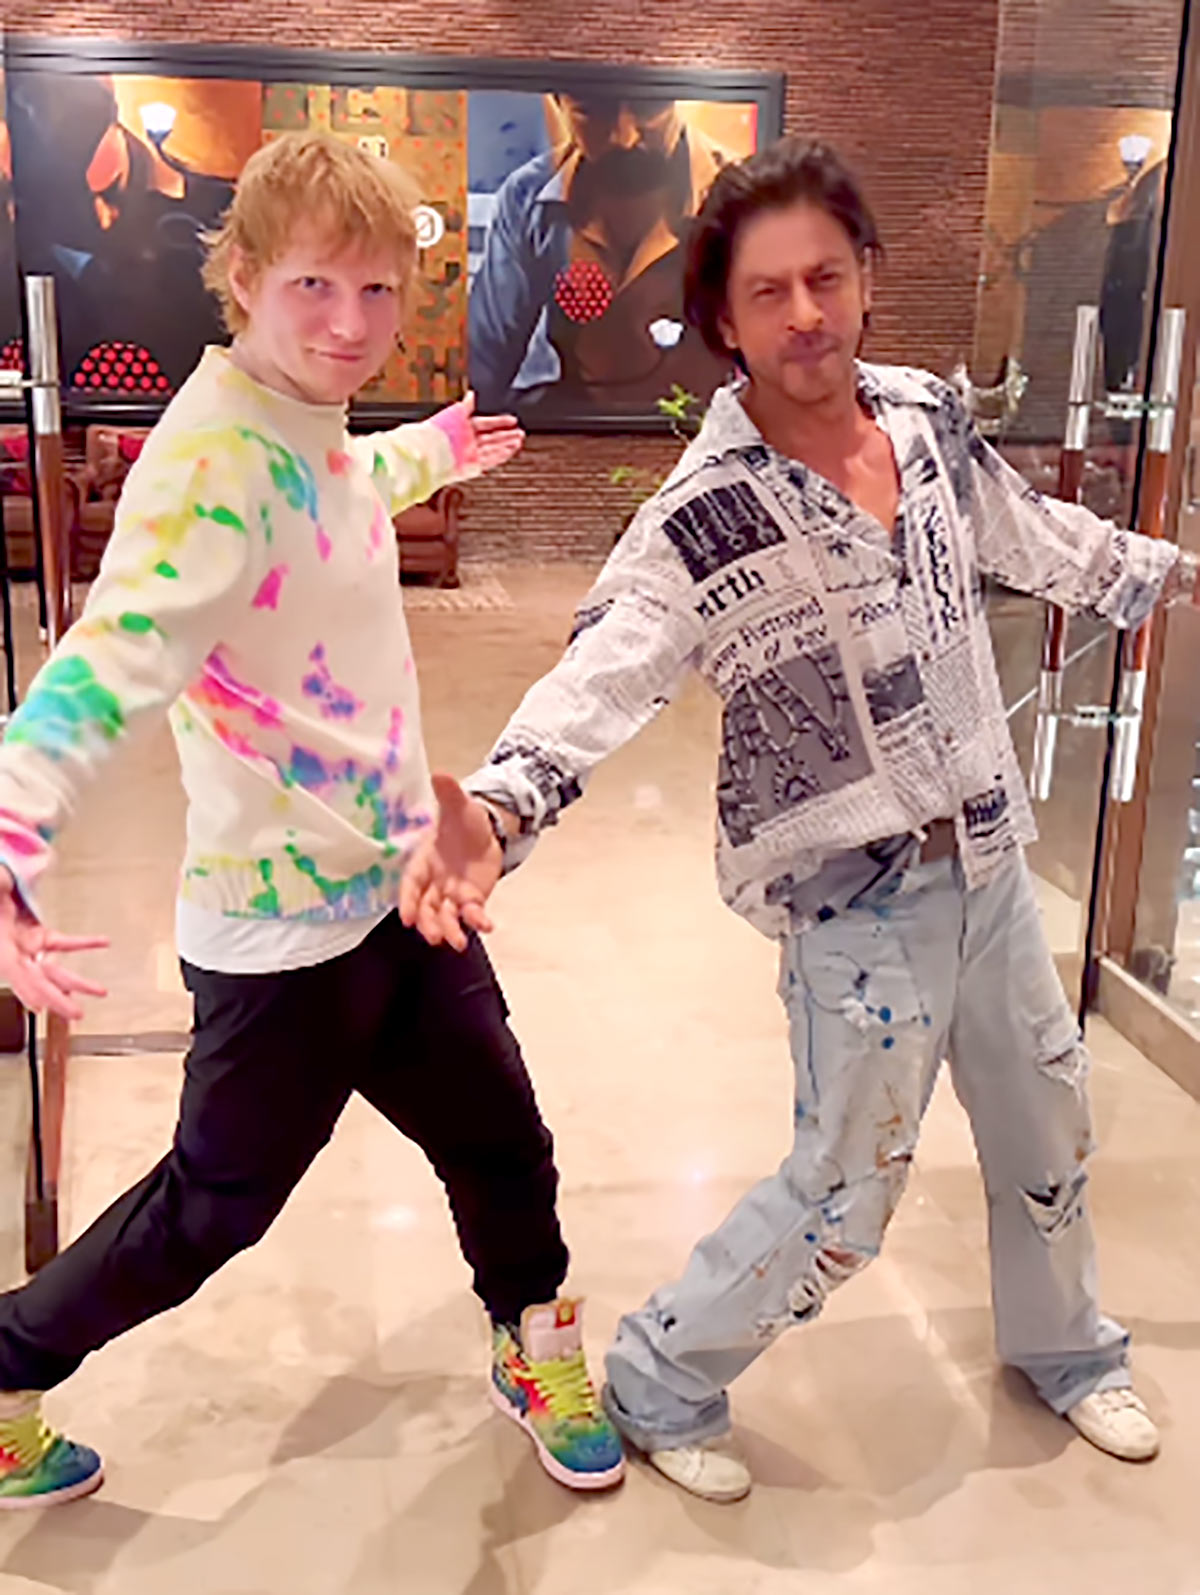 Has Ed Sheeran Got SRK's Pose Right?